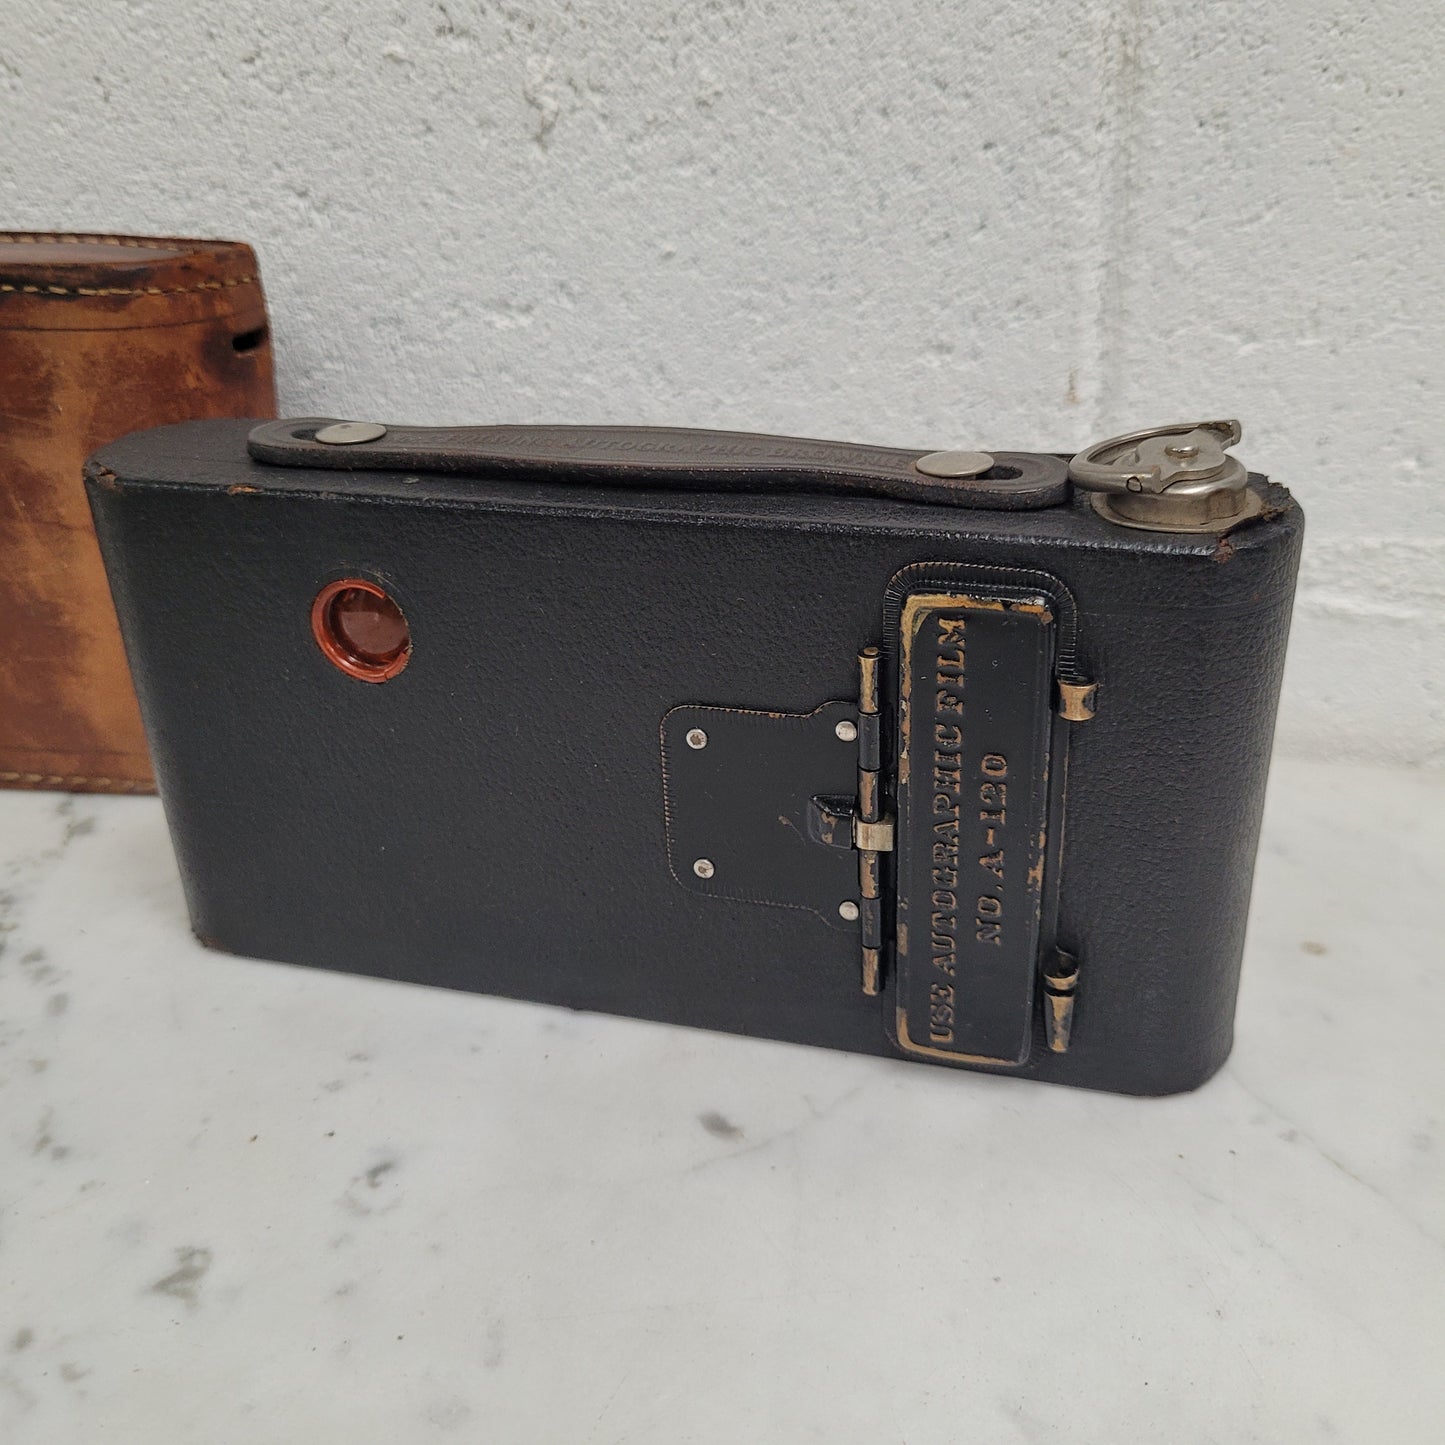 Kodak No 2 Folding Autographic Camera With Leather Case